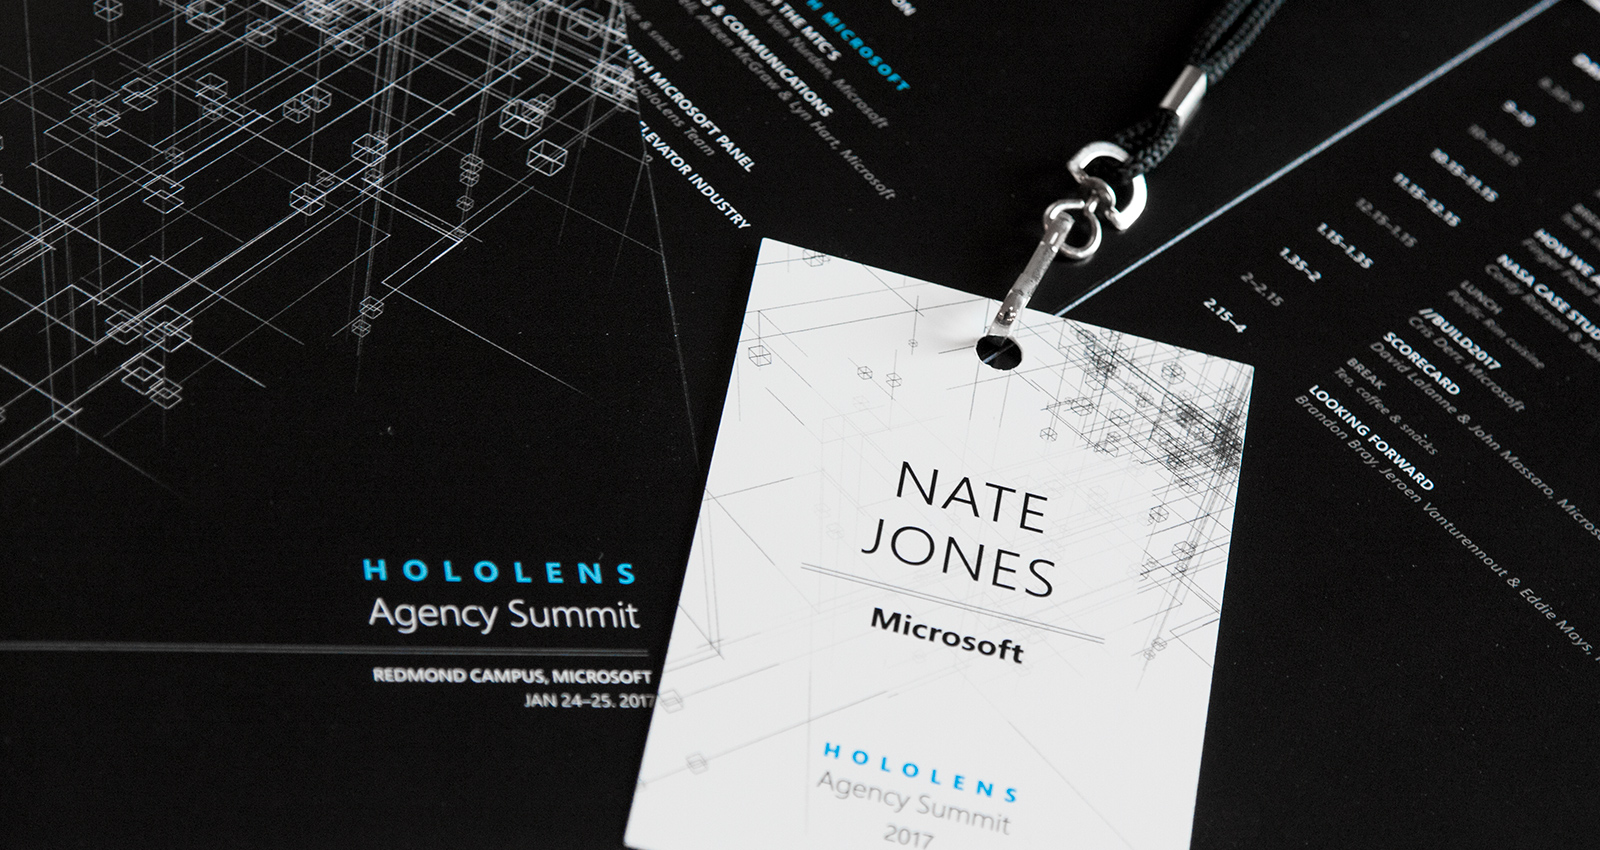 HoloLens Agency Summit Identity